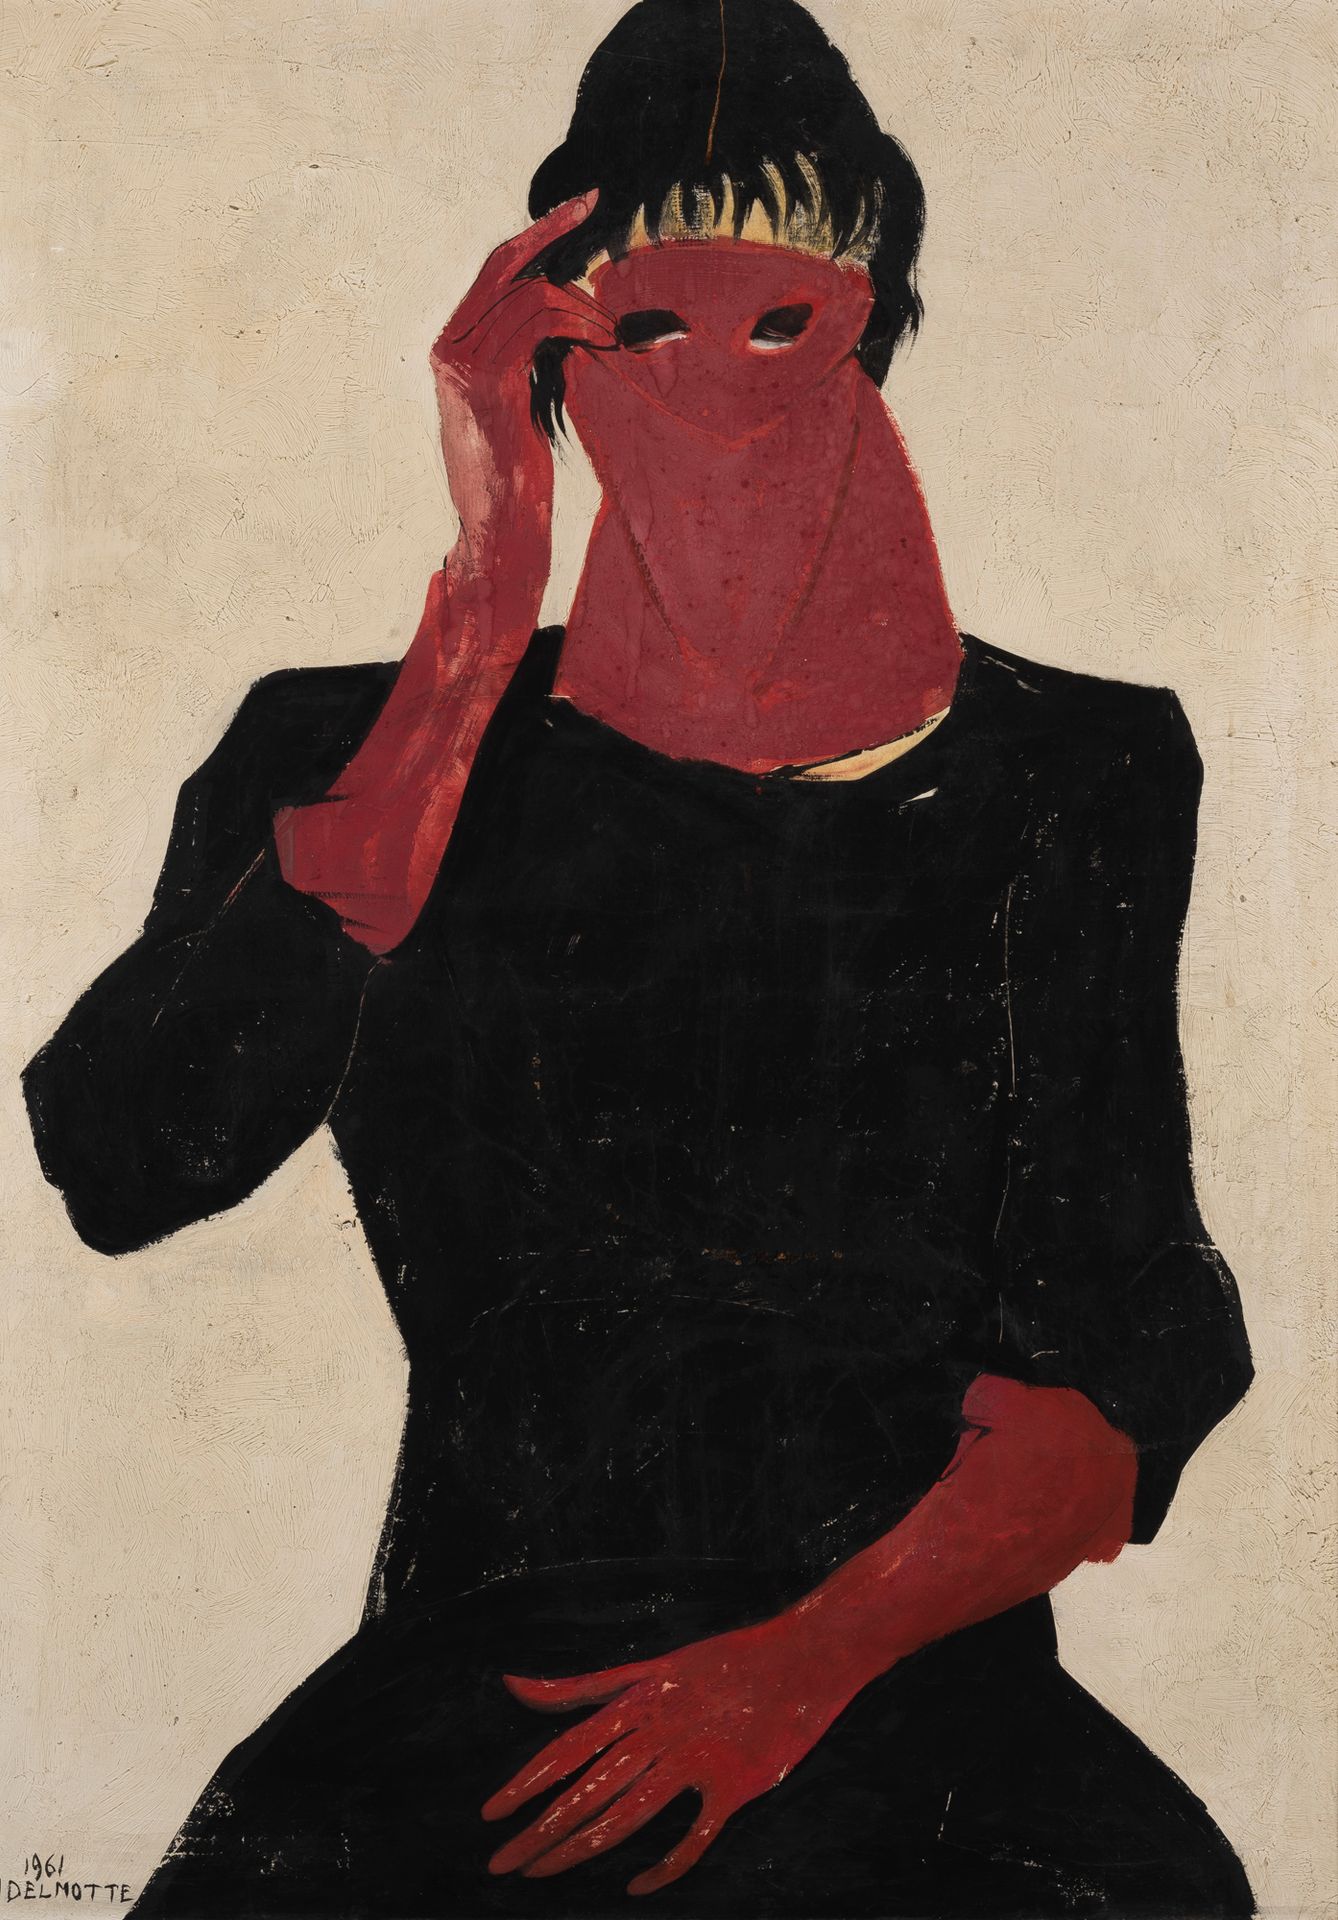 MARCEL DELMOTTE (1901-1984) 面具》，1961年。
布面油画。
左下方有签名和日期。
观察者网
在这里，我们可以看到我们的工作，我们的&hellip;